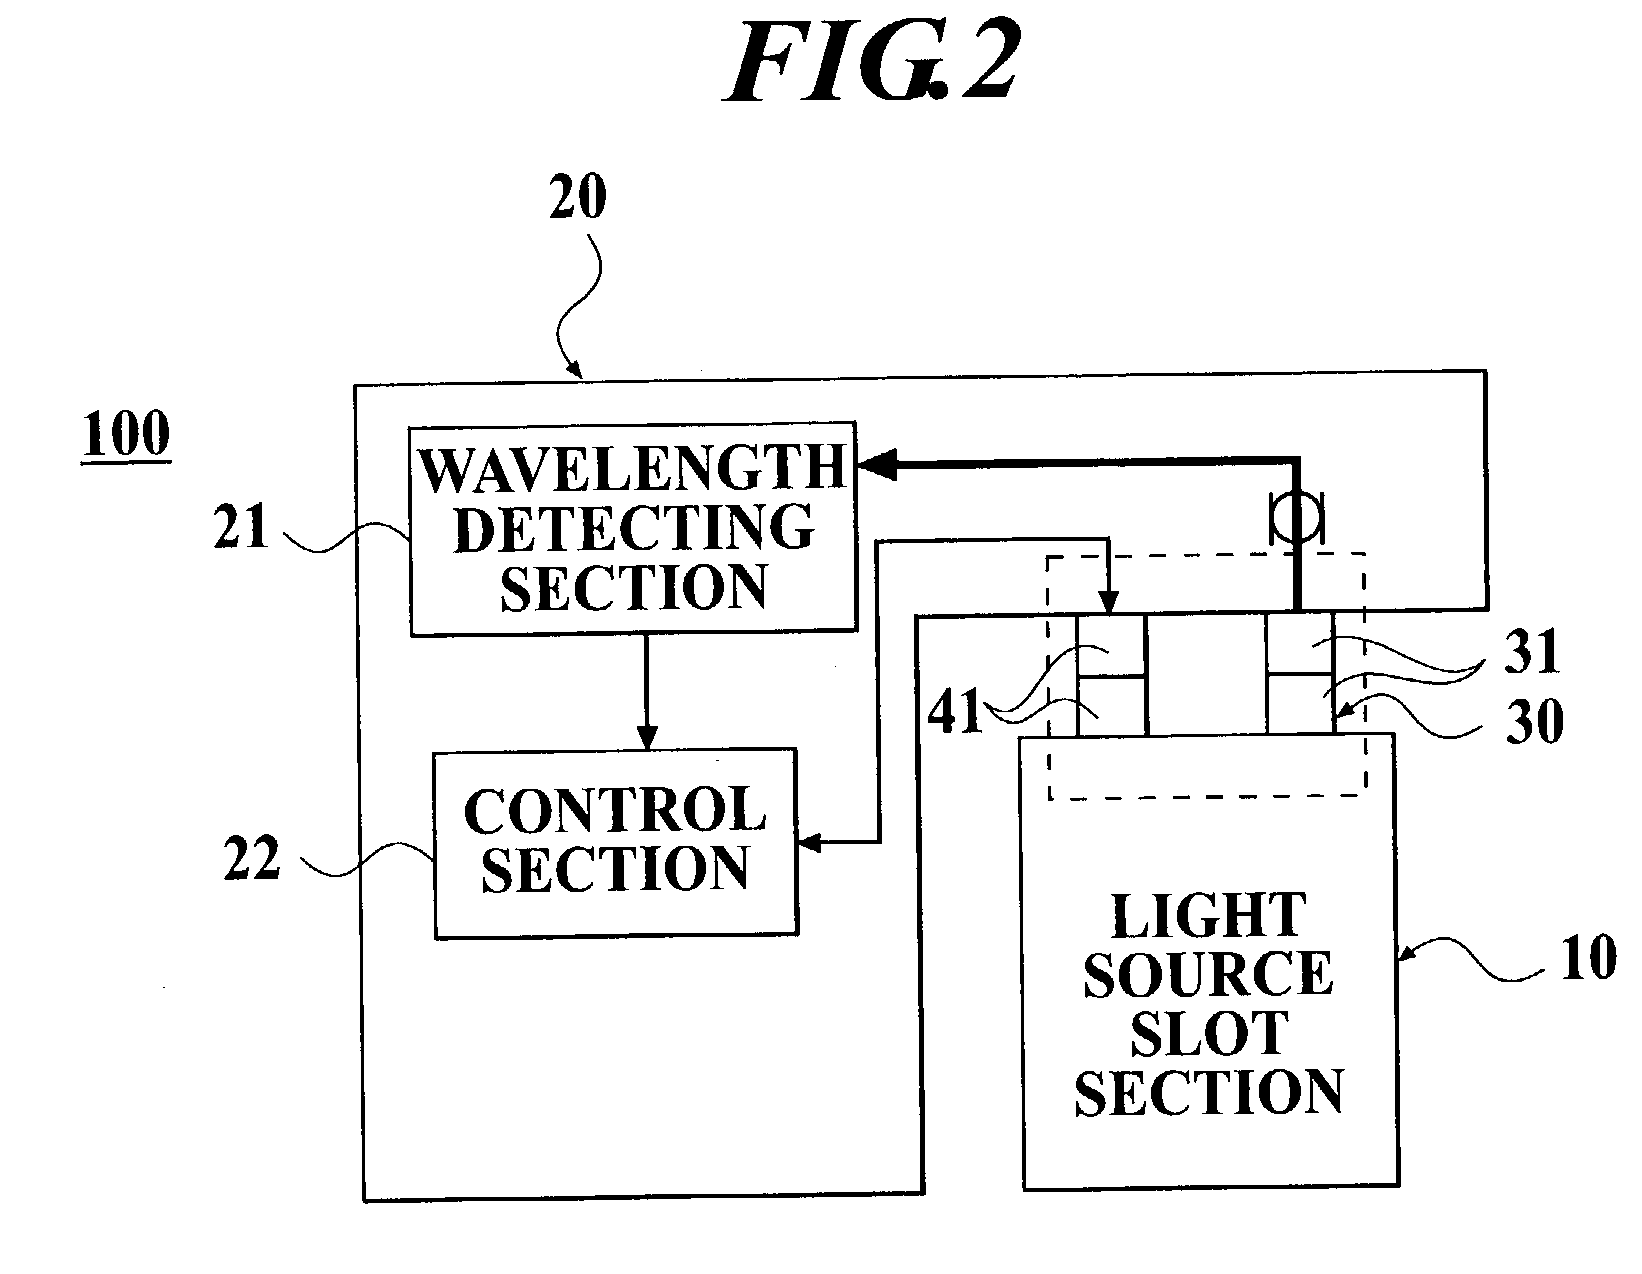 Wavelength variable light source apparatus